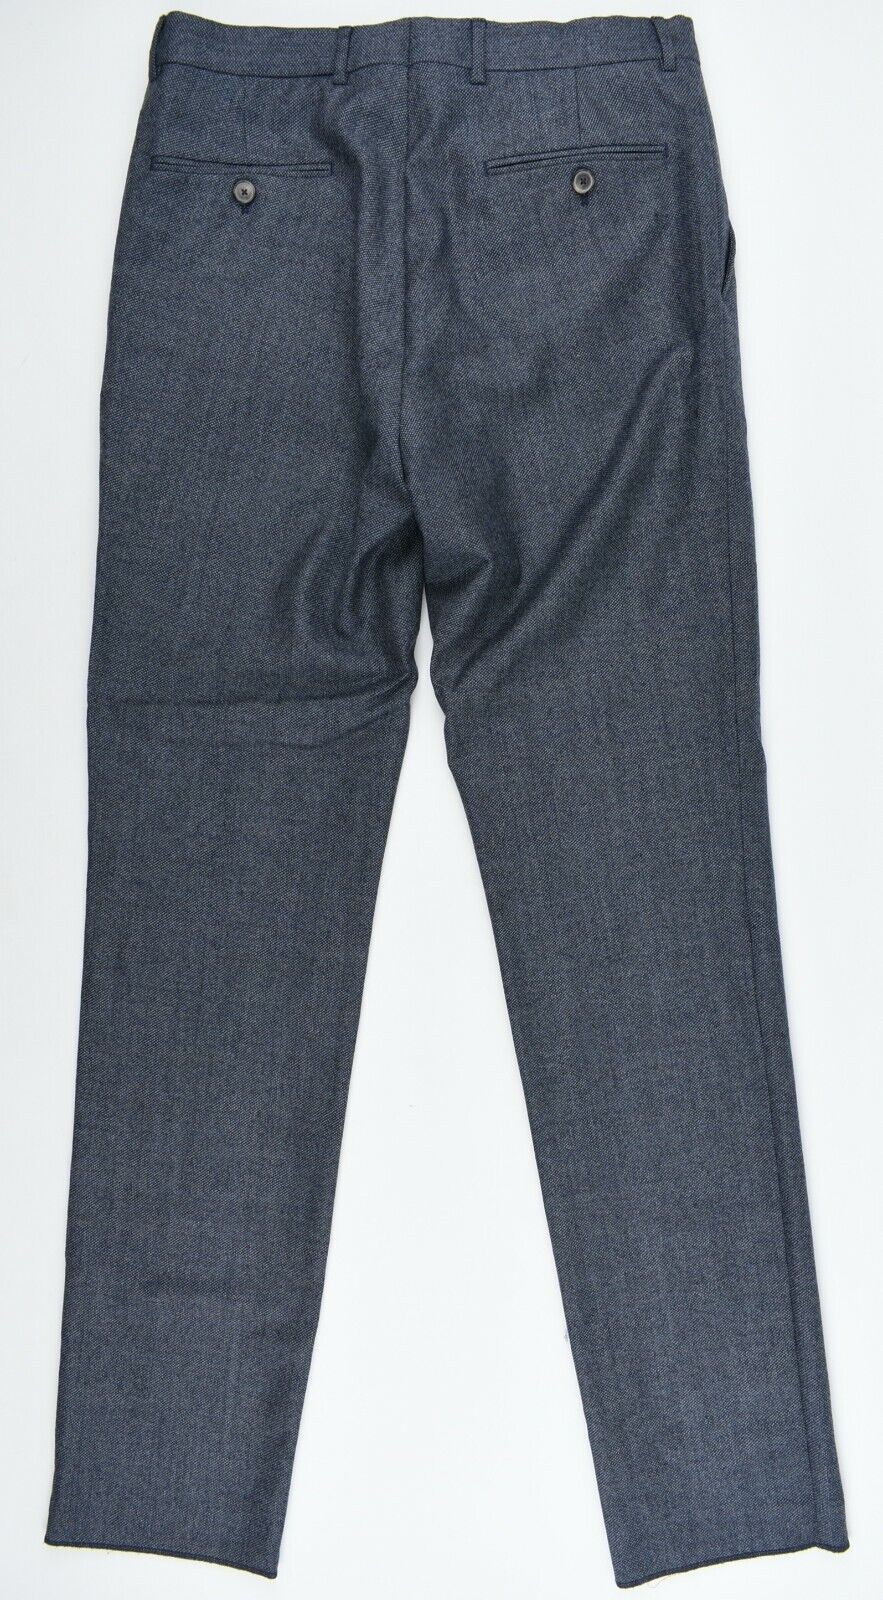 TED BAKER Men's Grey Smart Trousers Pants, 100% WOOL, Slim Fit, size W30